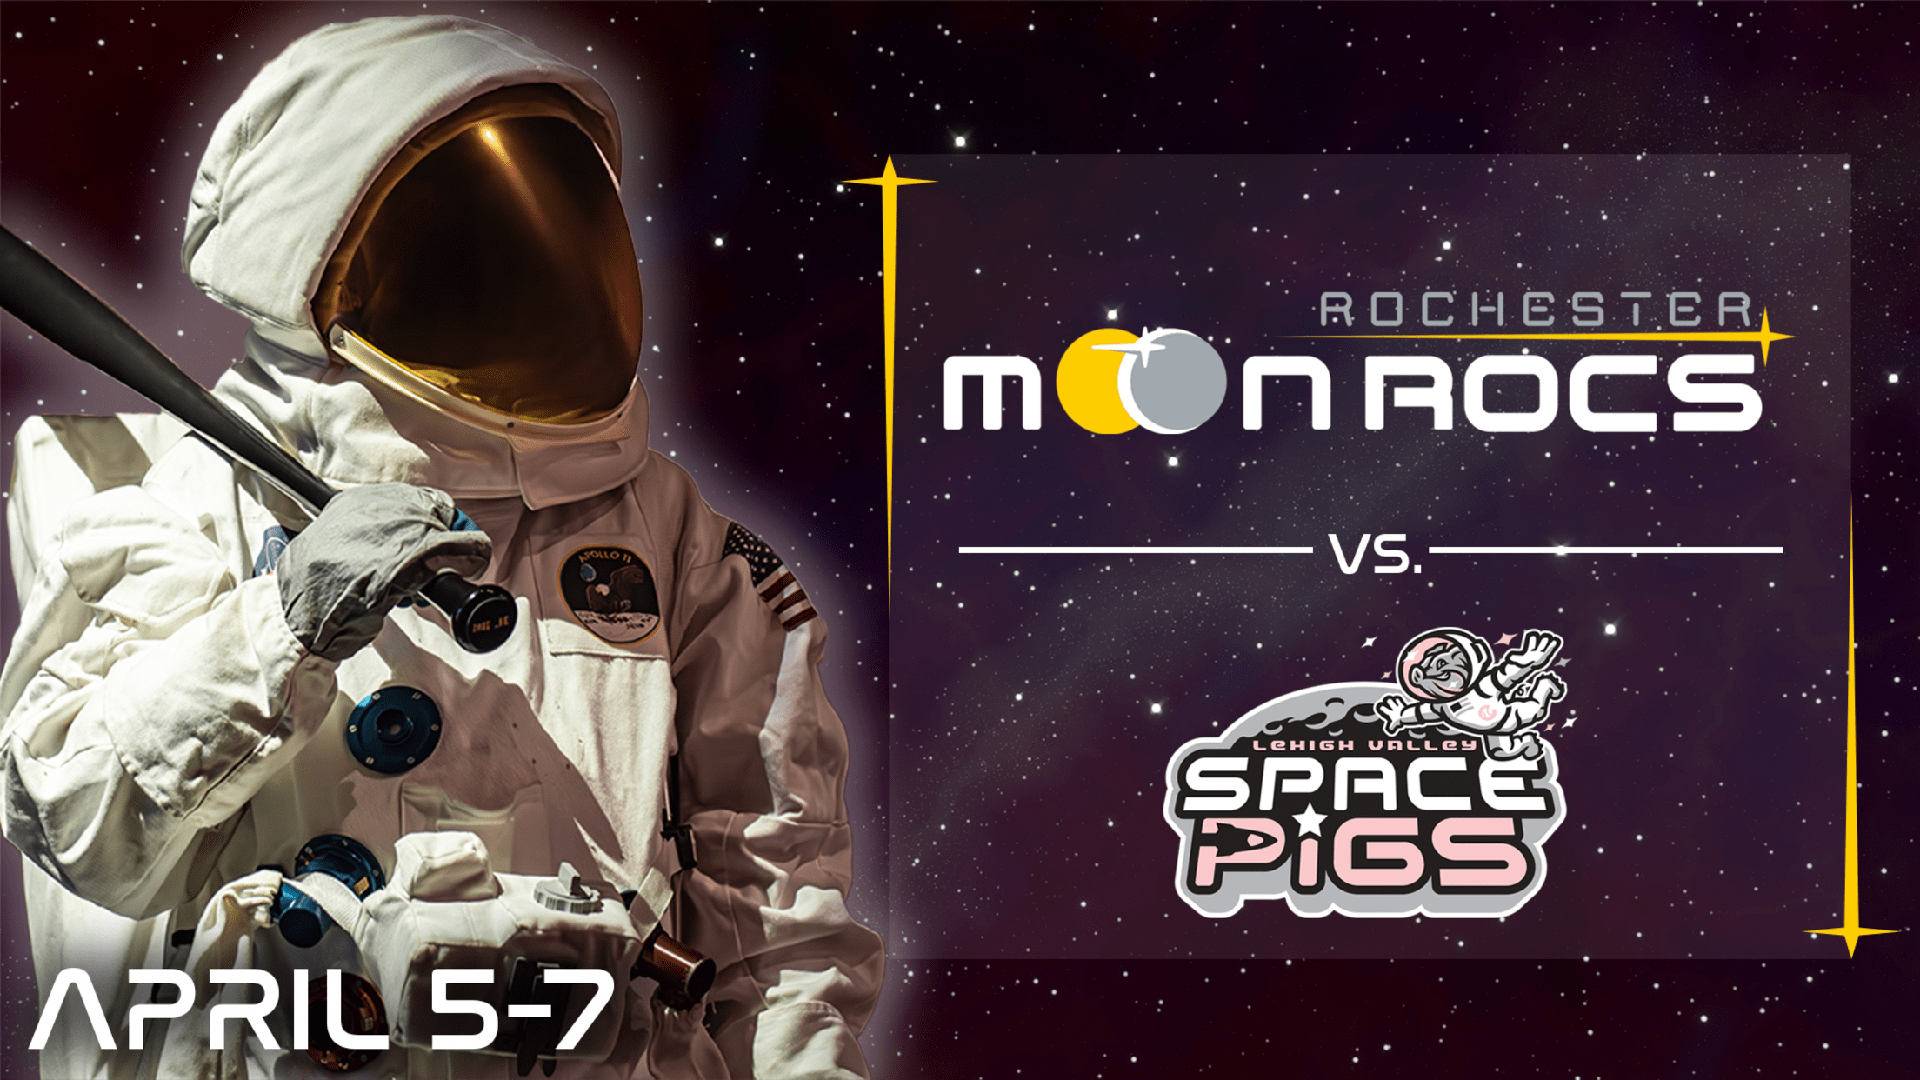 Moon Rocs vs. Space Pigs